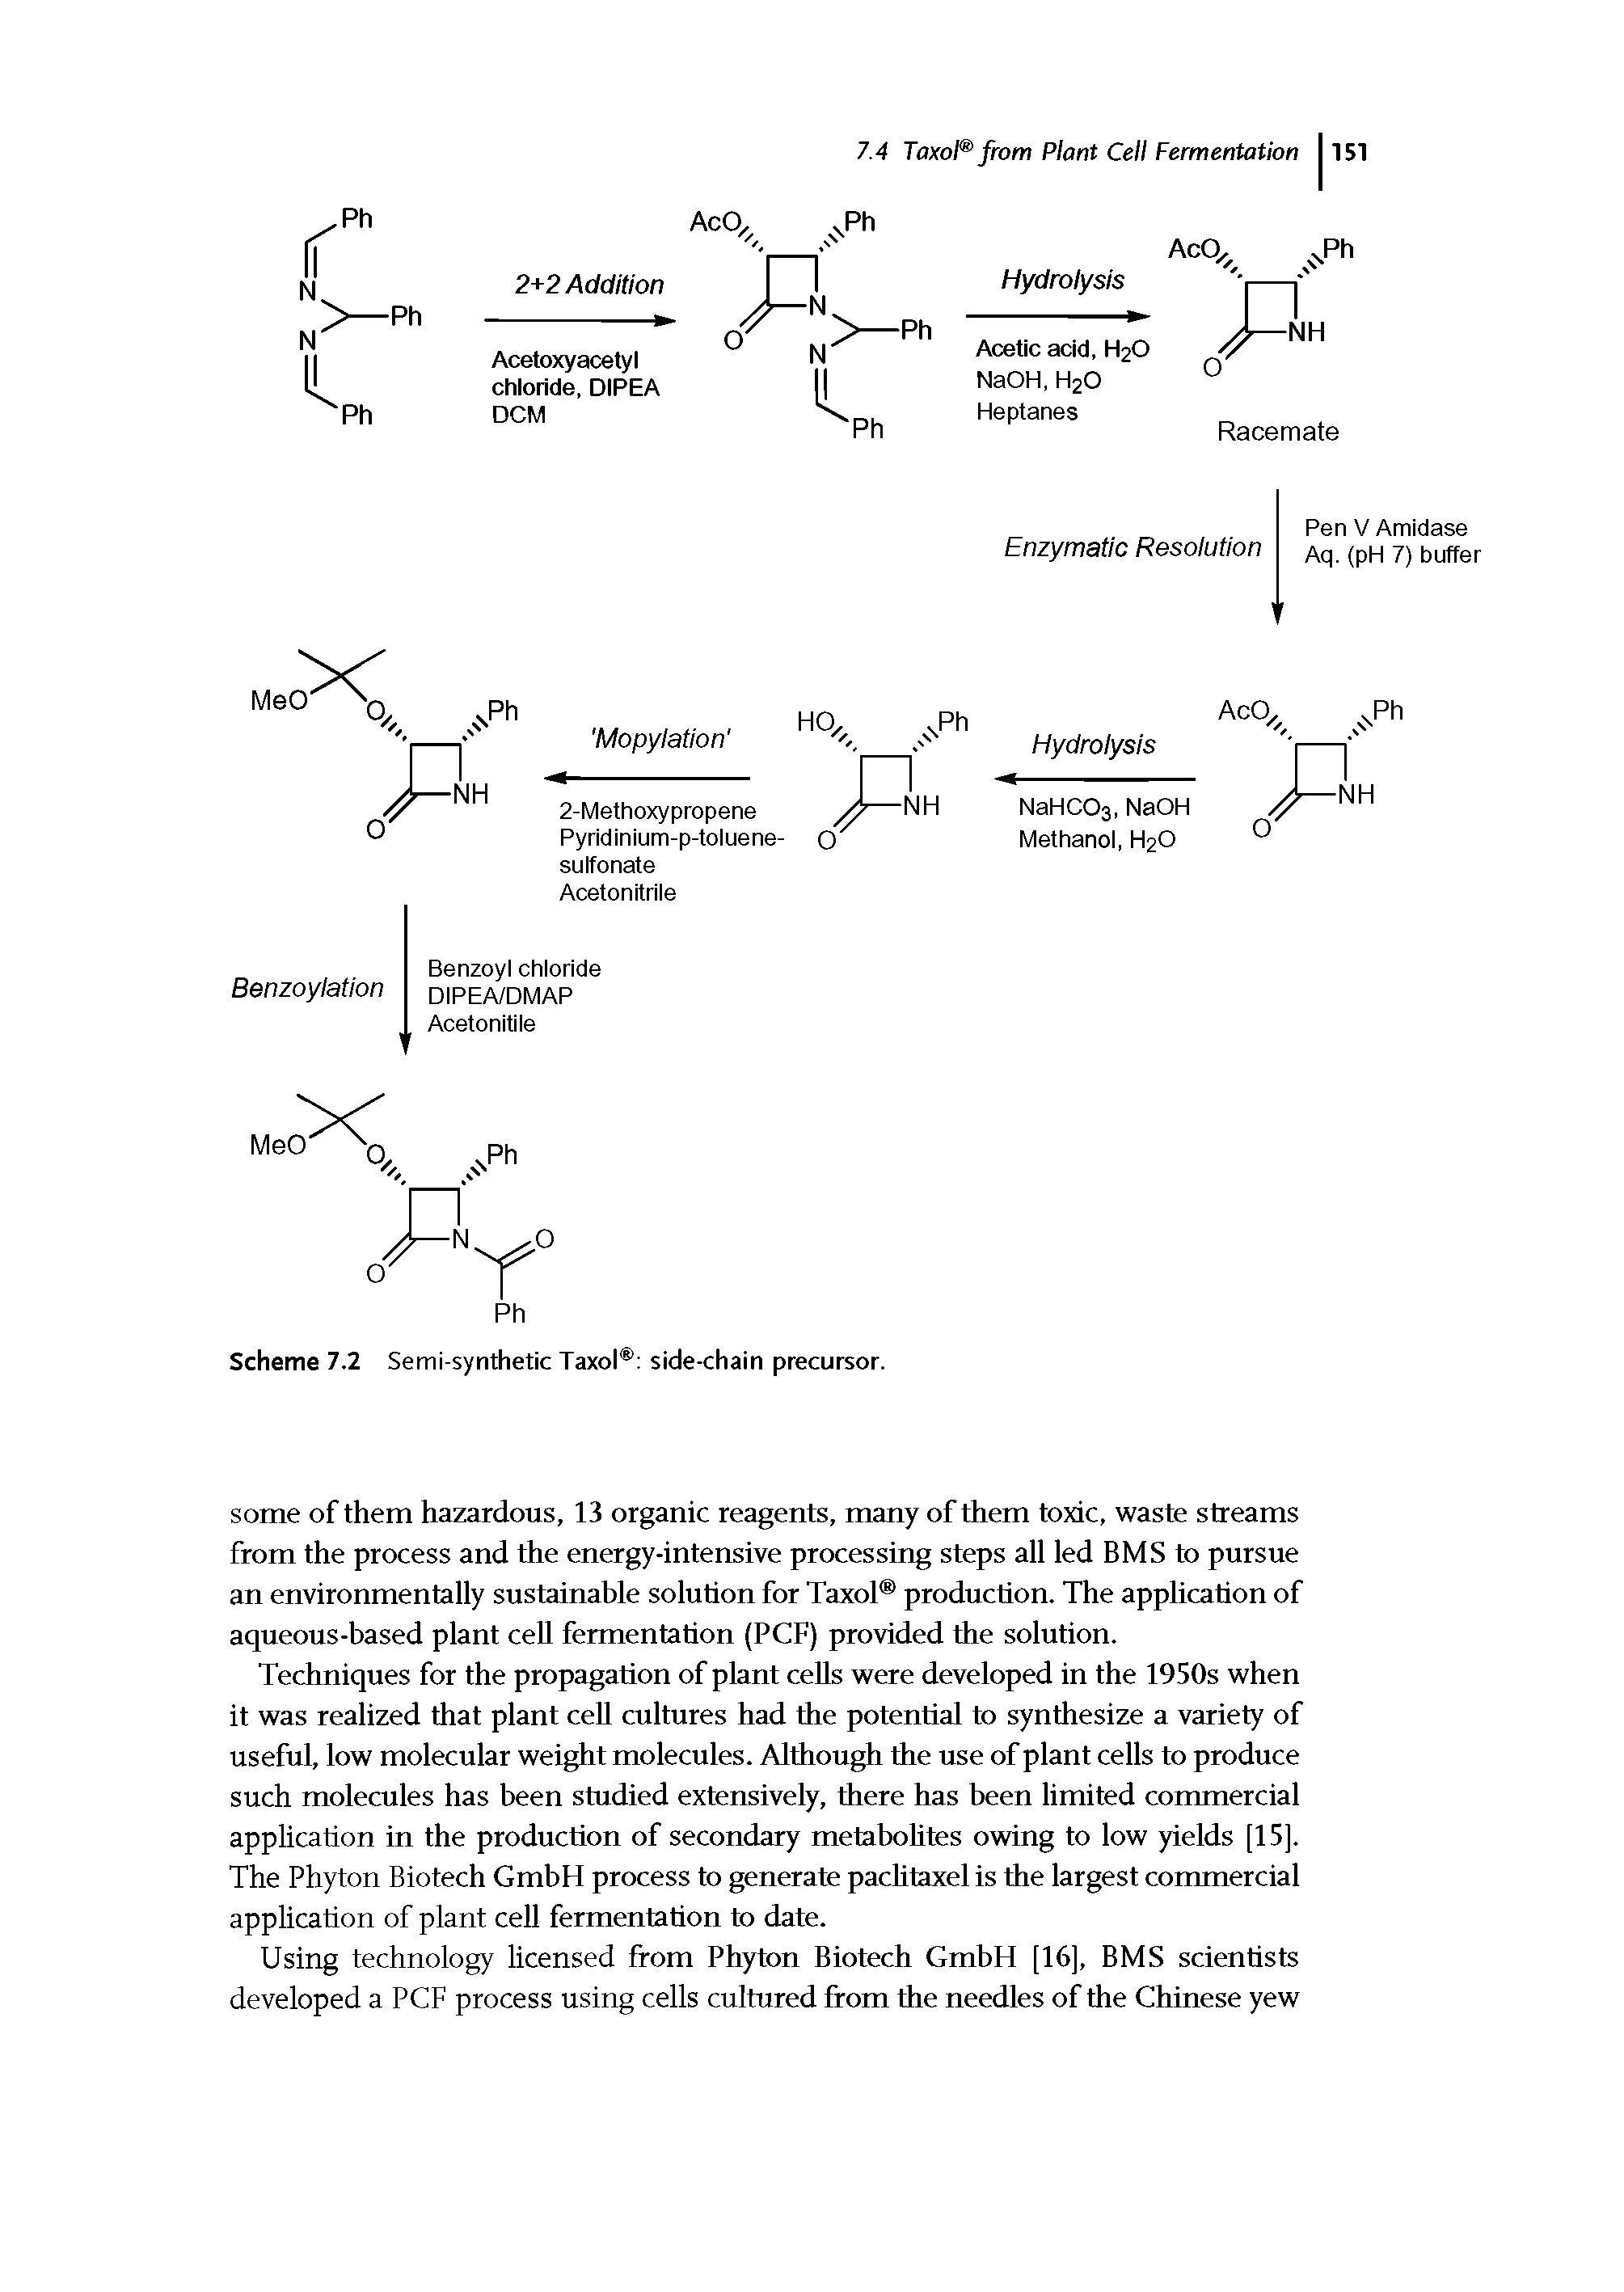 Scheme 7.2 Semi-synthetic Taxol side-chain precursor.